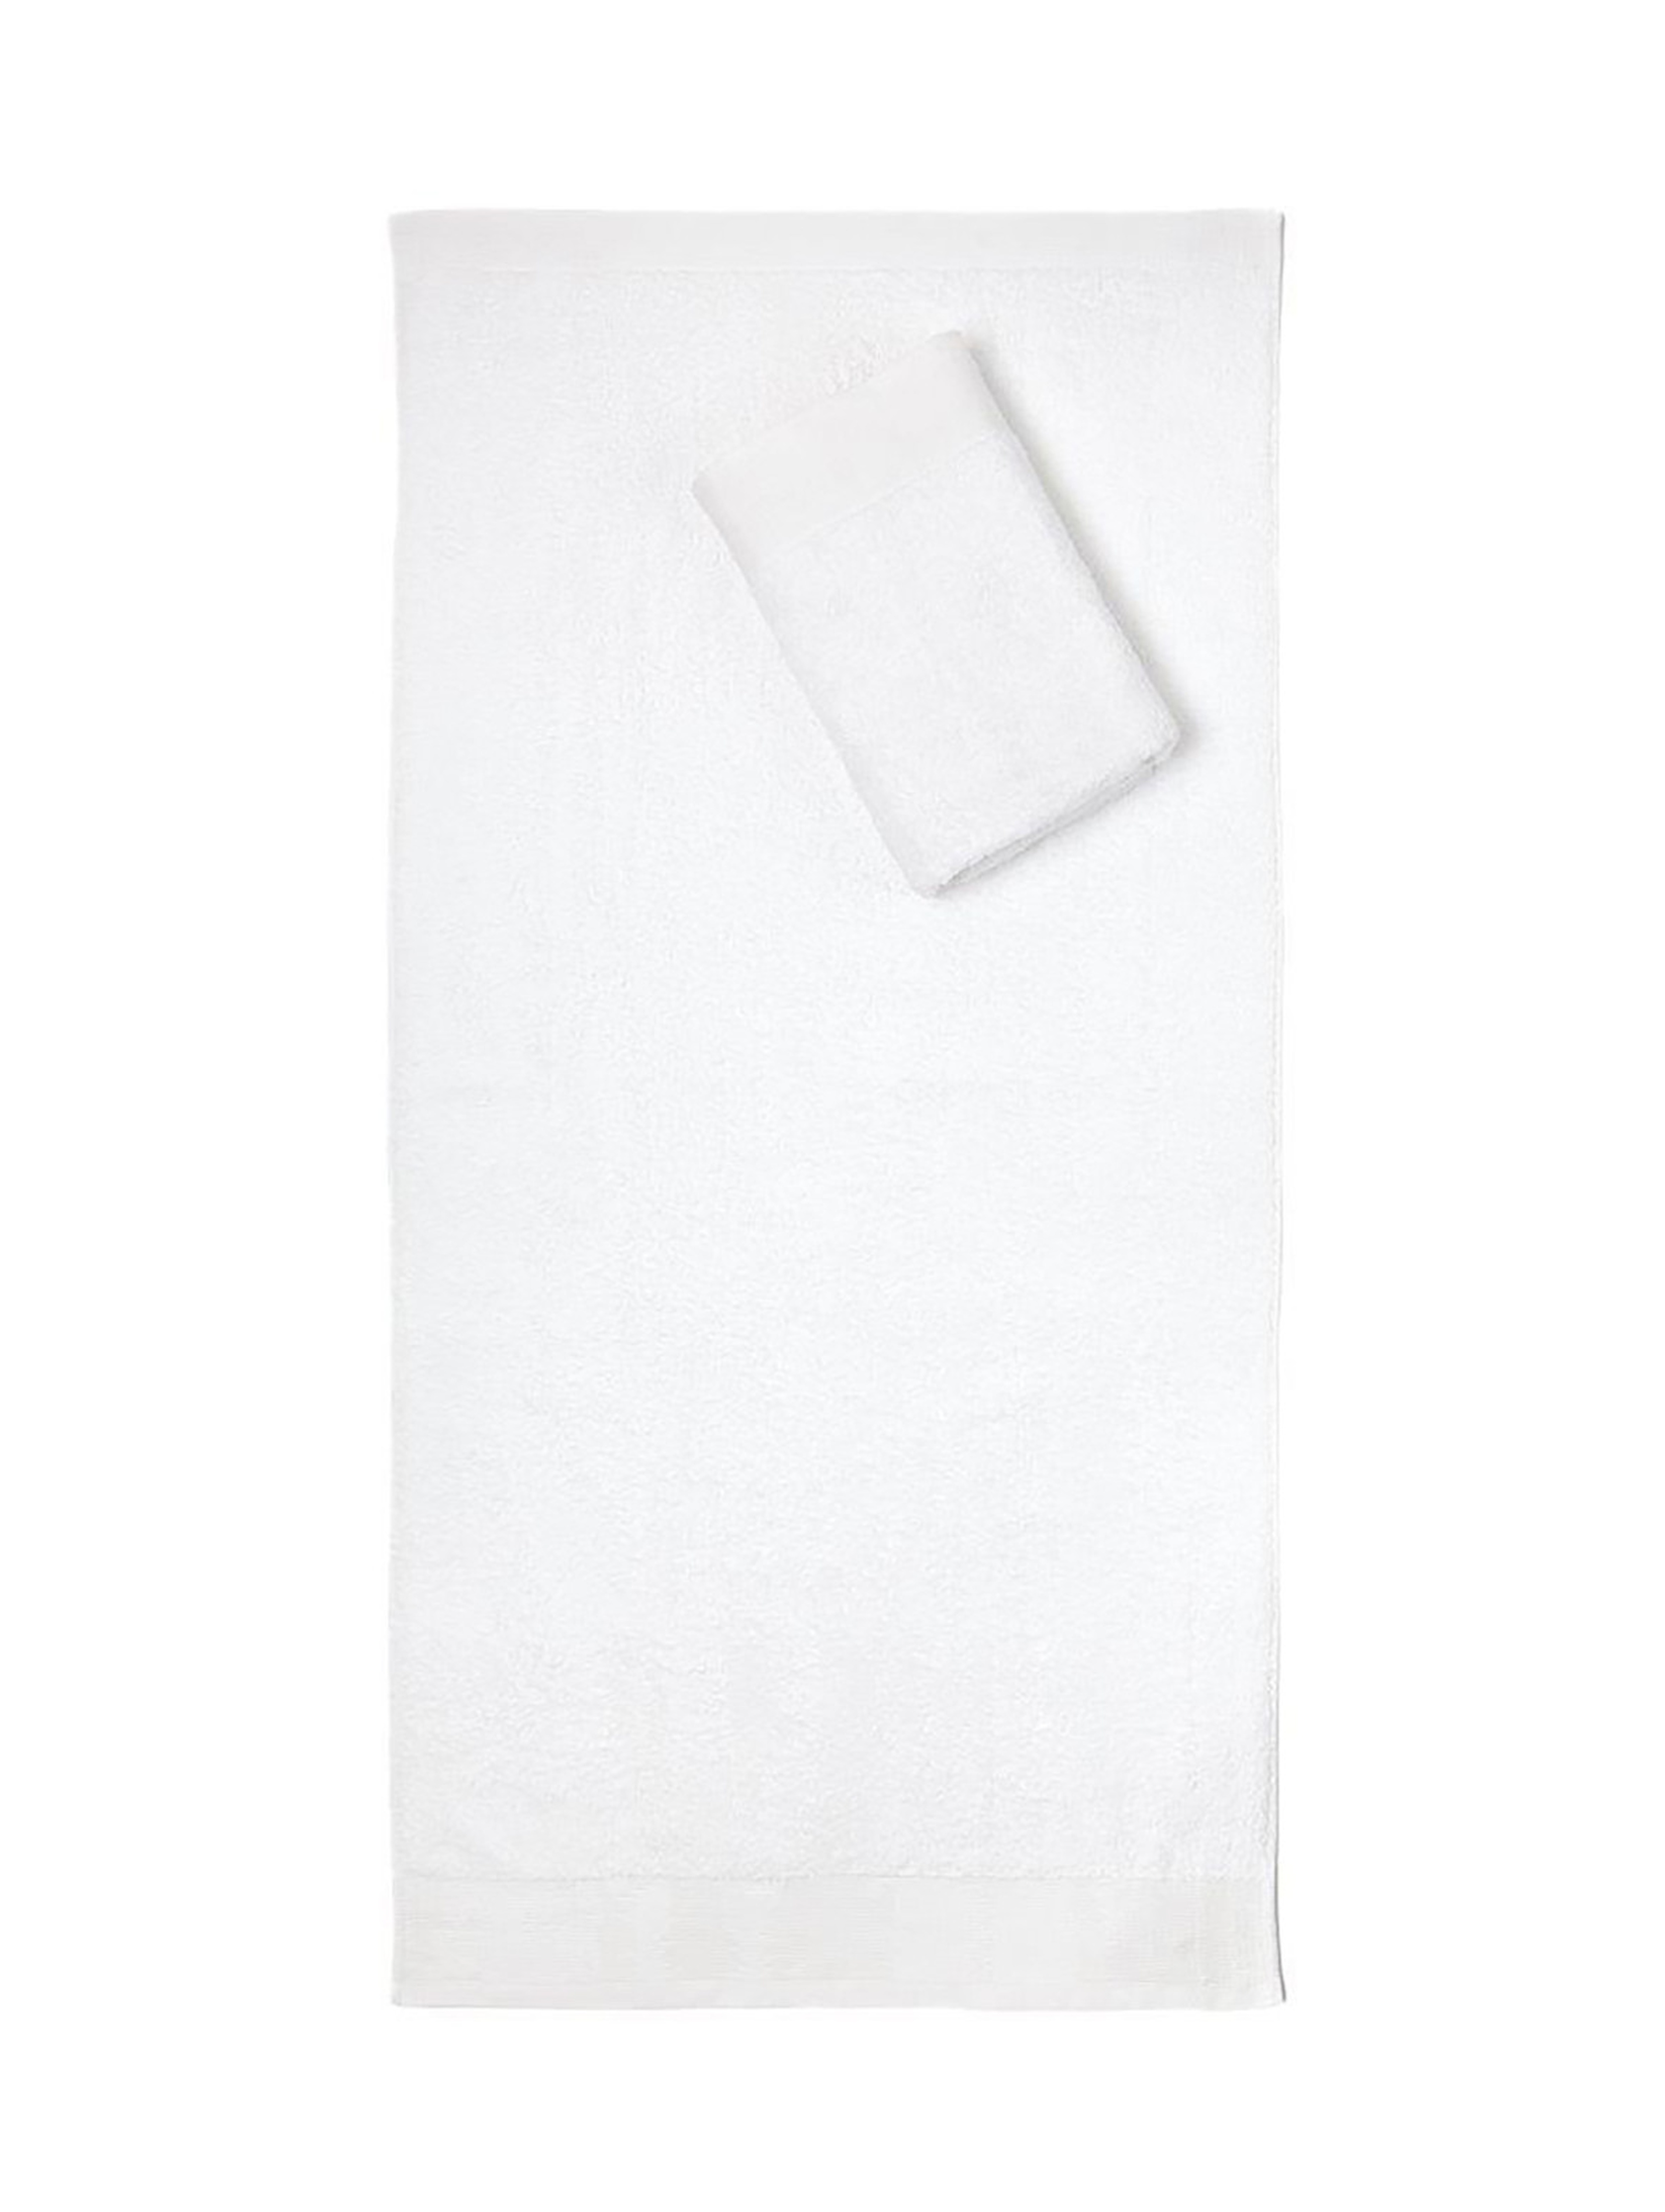 Ręcznik aqua 70x140 cm frotte biały